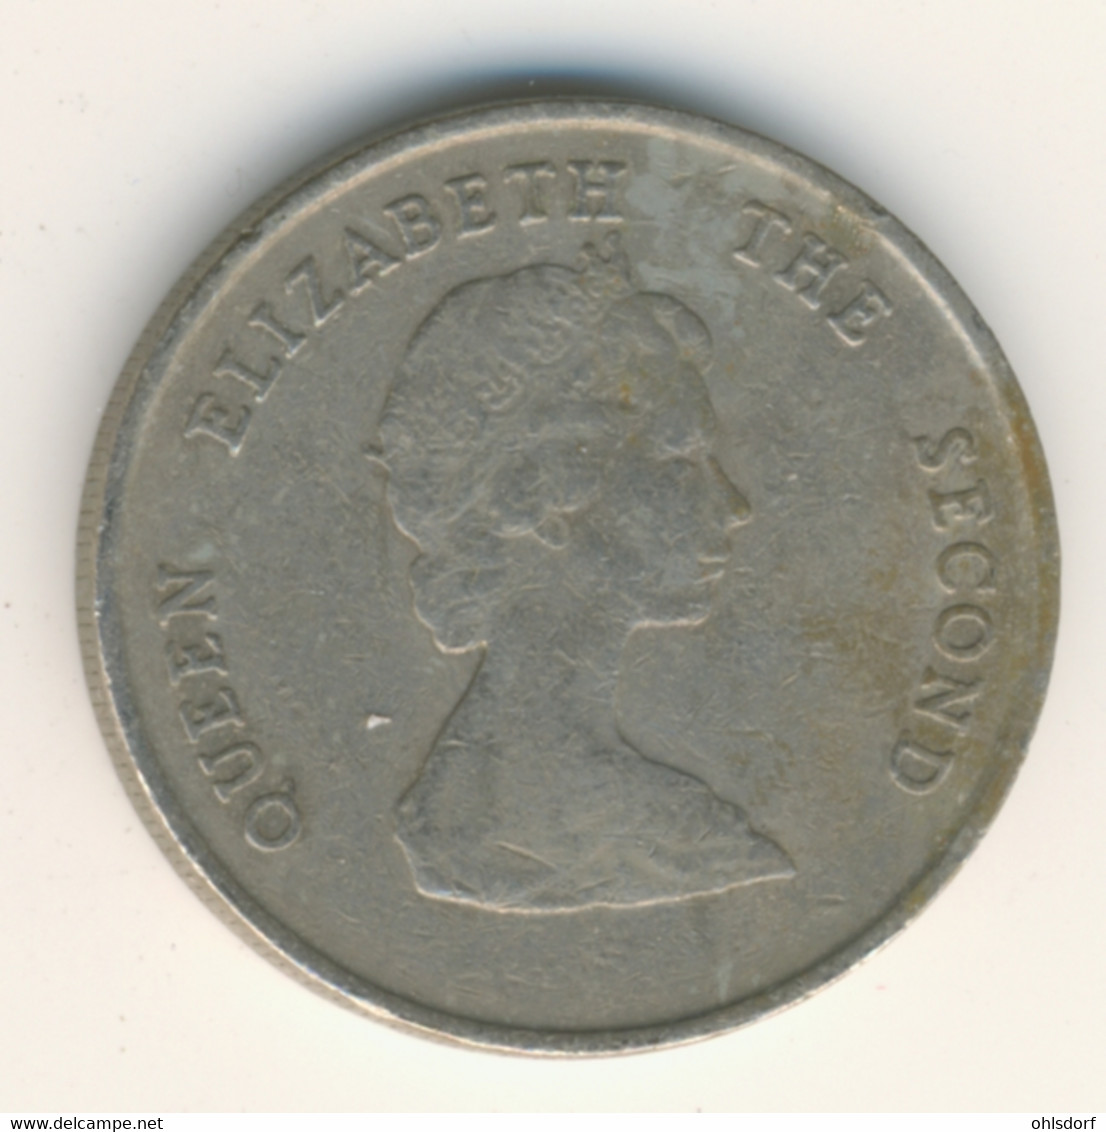 EAST CARIBBEAN STATES 1989: 25 Cents, KM 14 - Caribe Oriental (Estados Del)